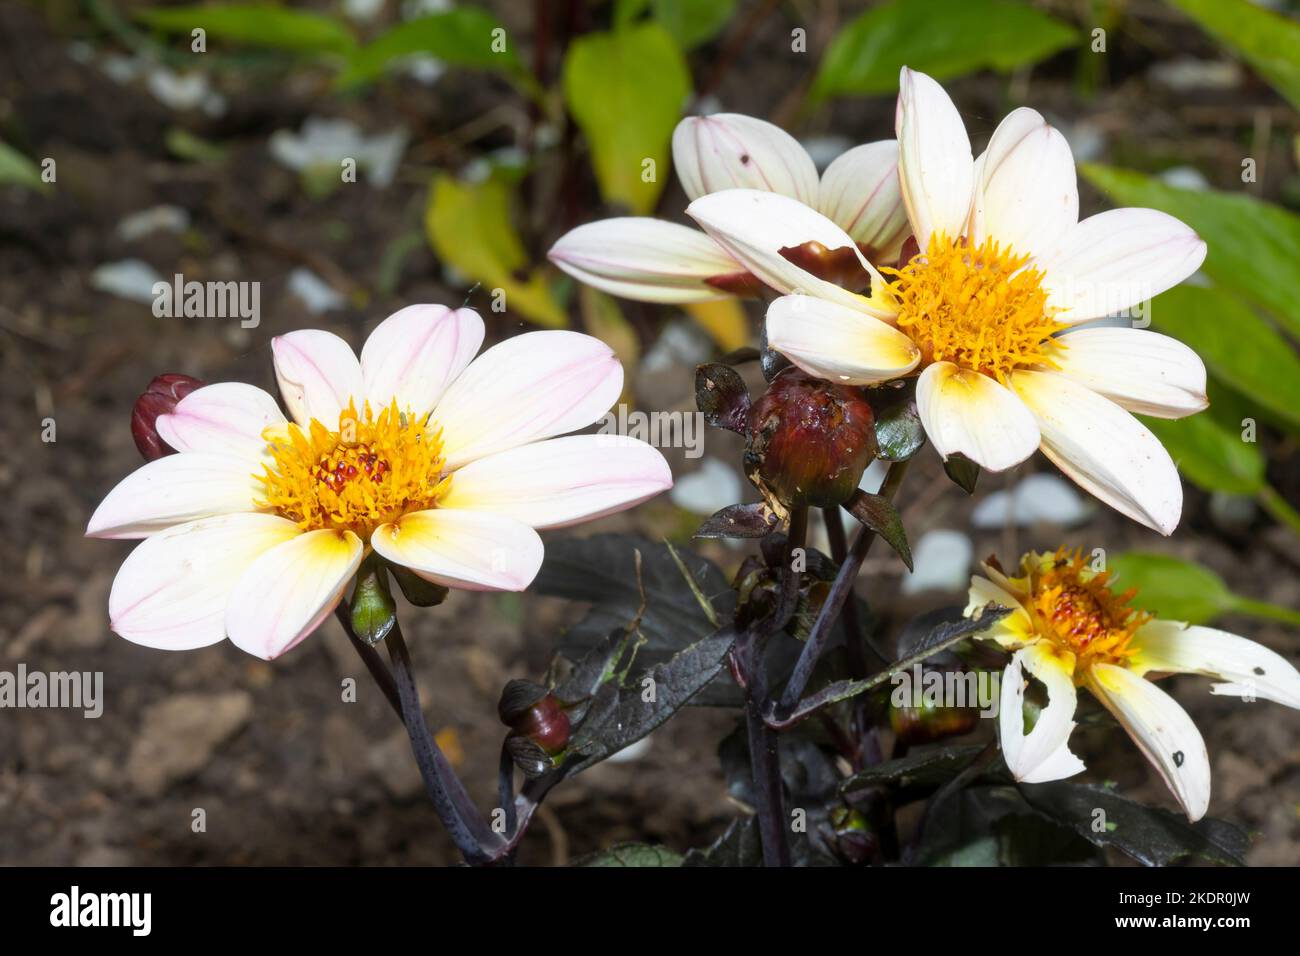 Dahlia happy days with white flowers, a dwarf variety of the Dahlia plant. Stock Photo